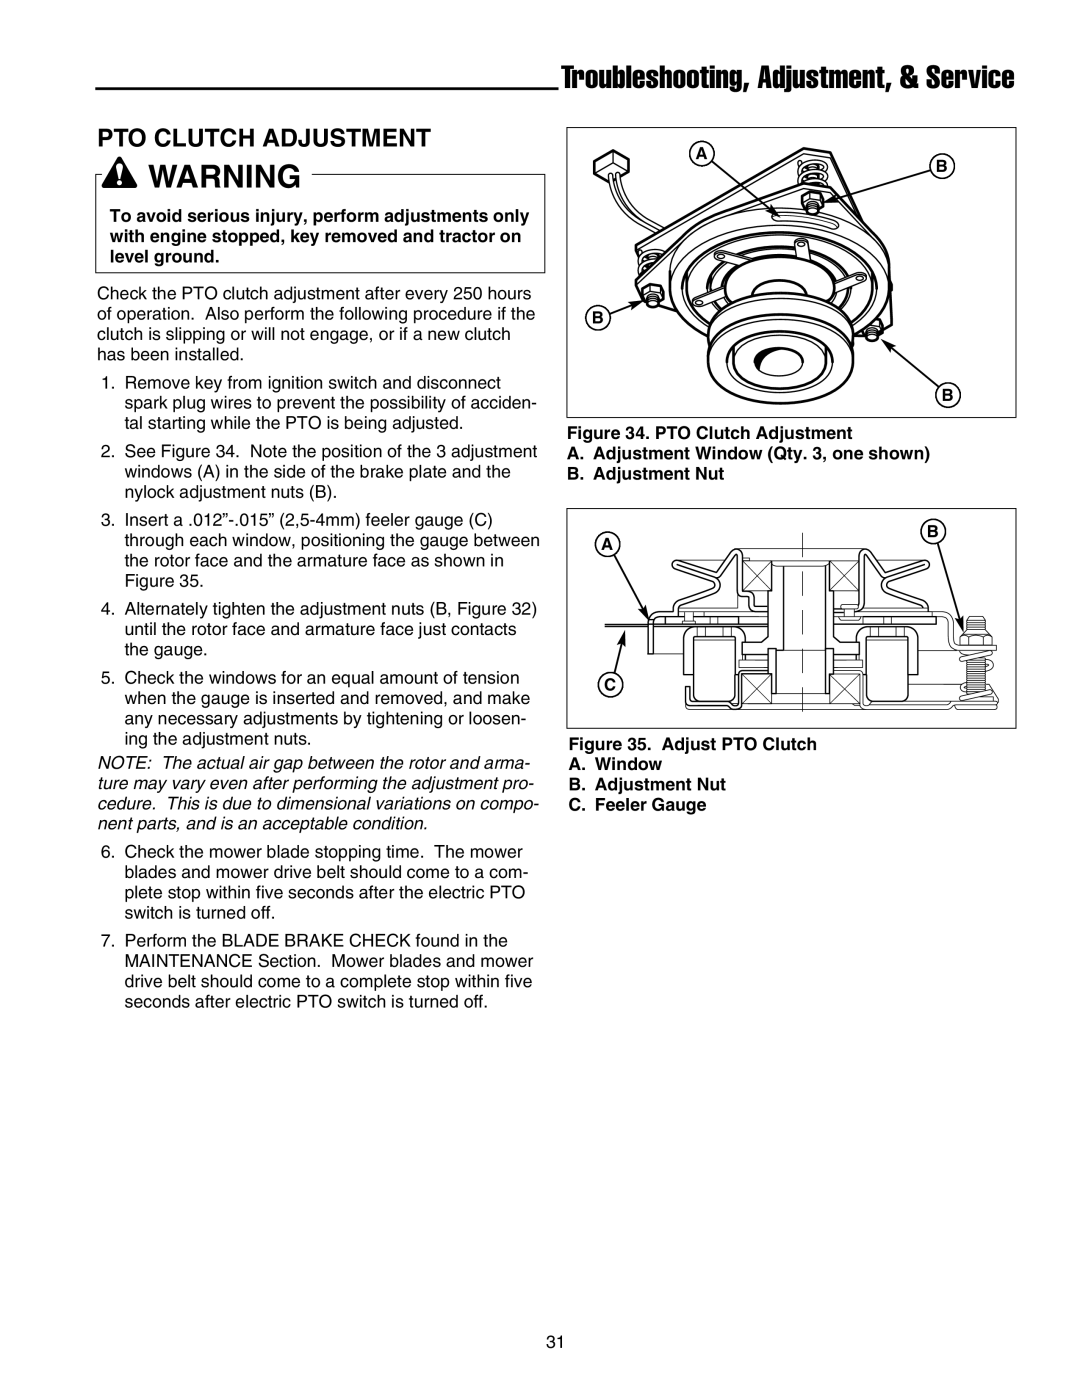 Snapper XL Series manual Pto Clutch Adjustment, Troubleshooting, Adjustment, & Service 